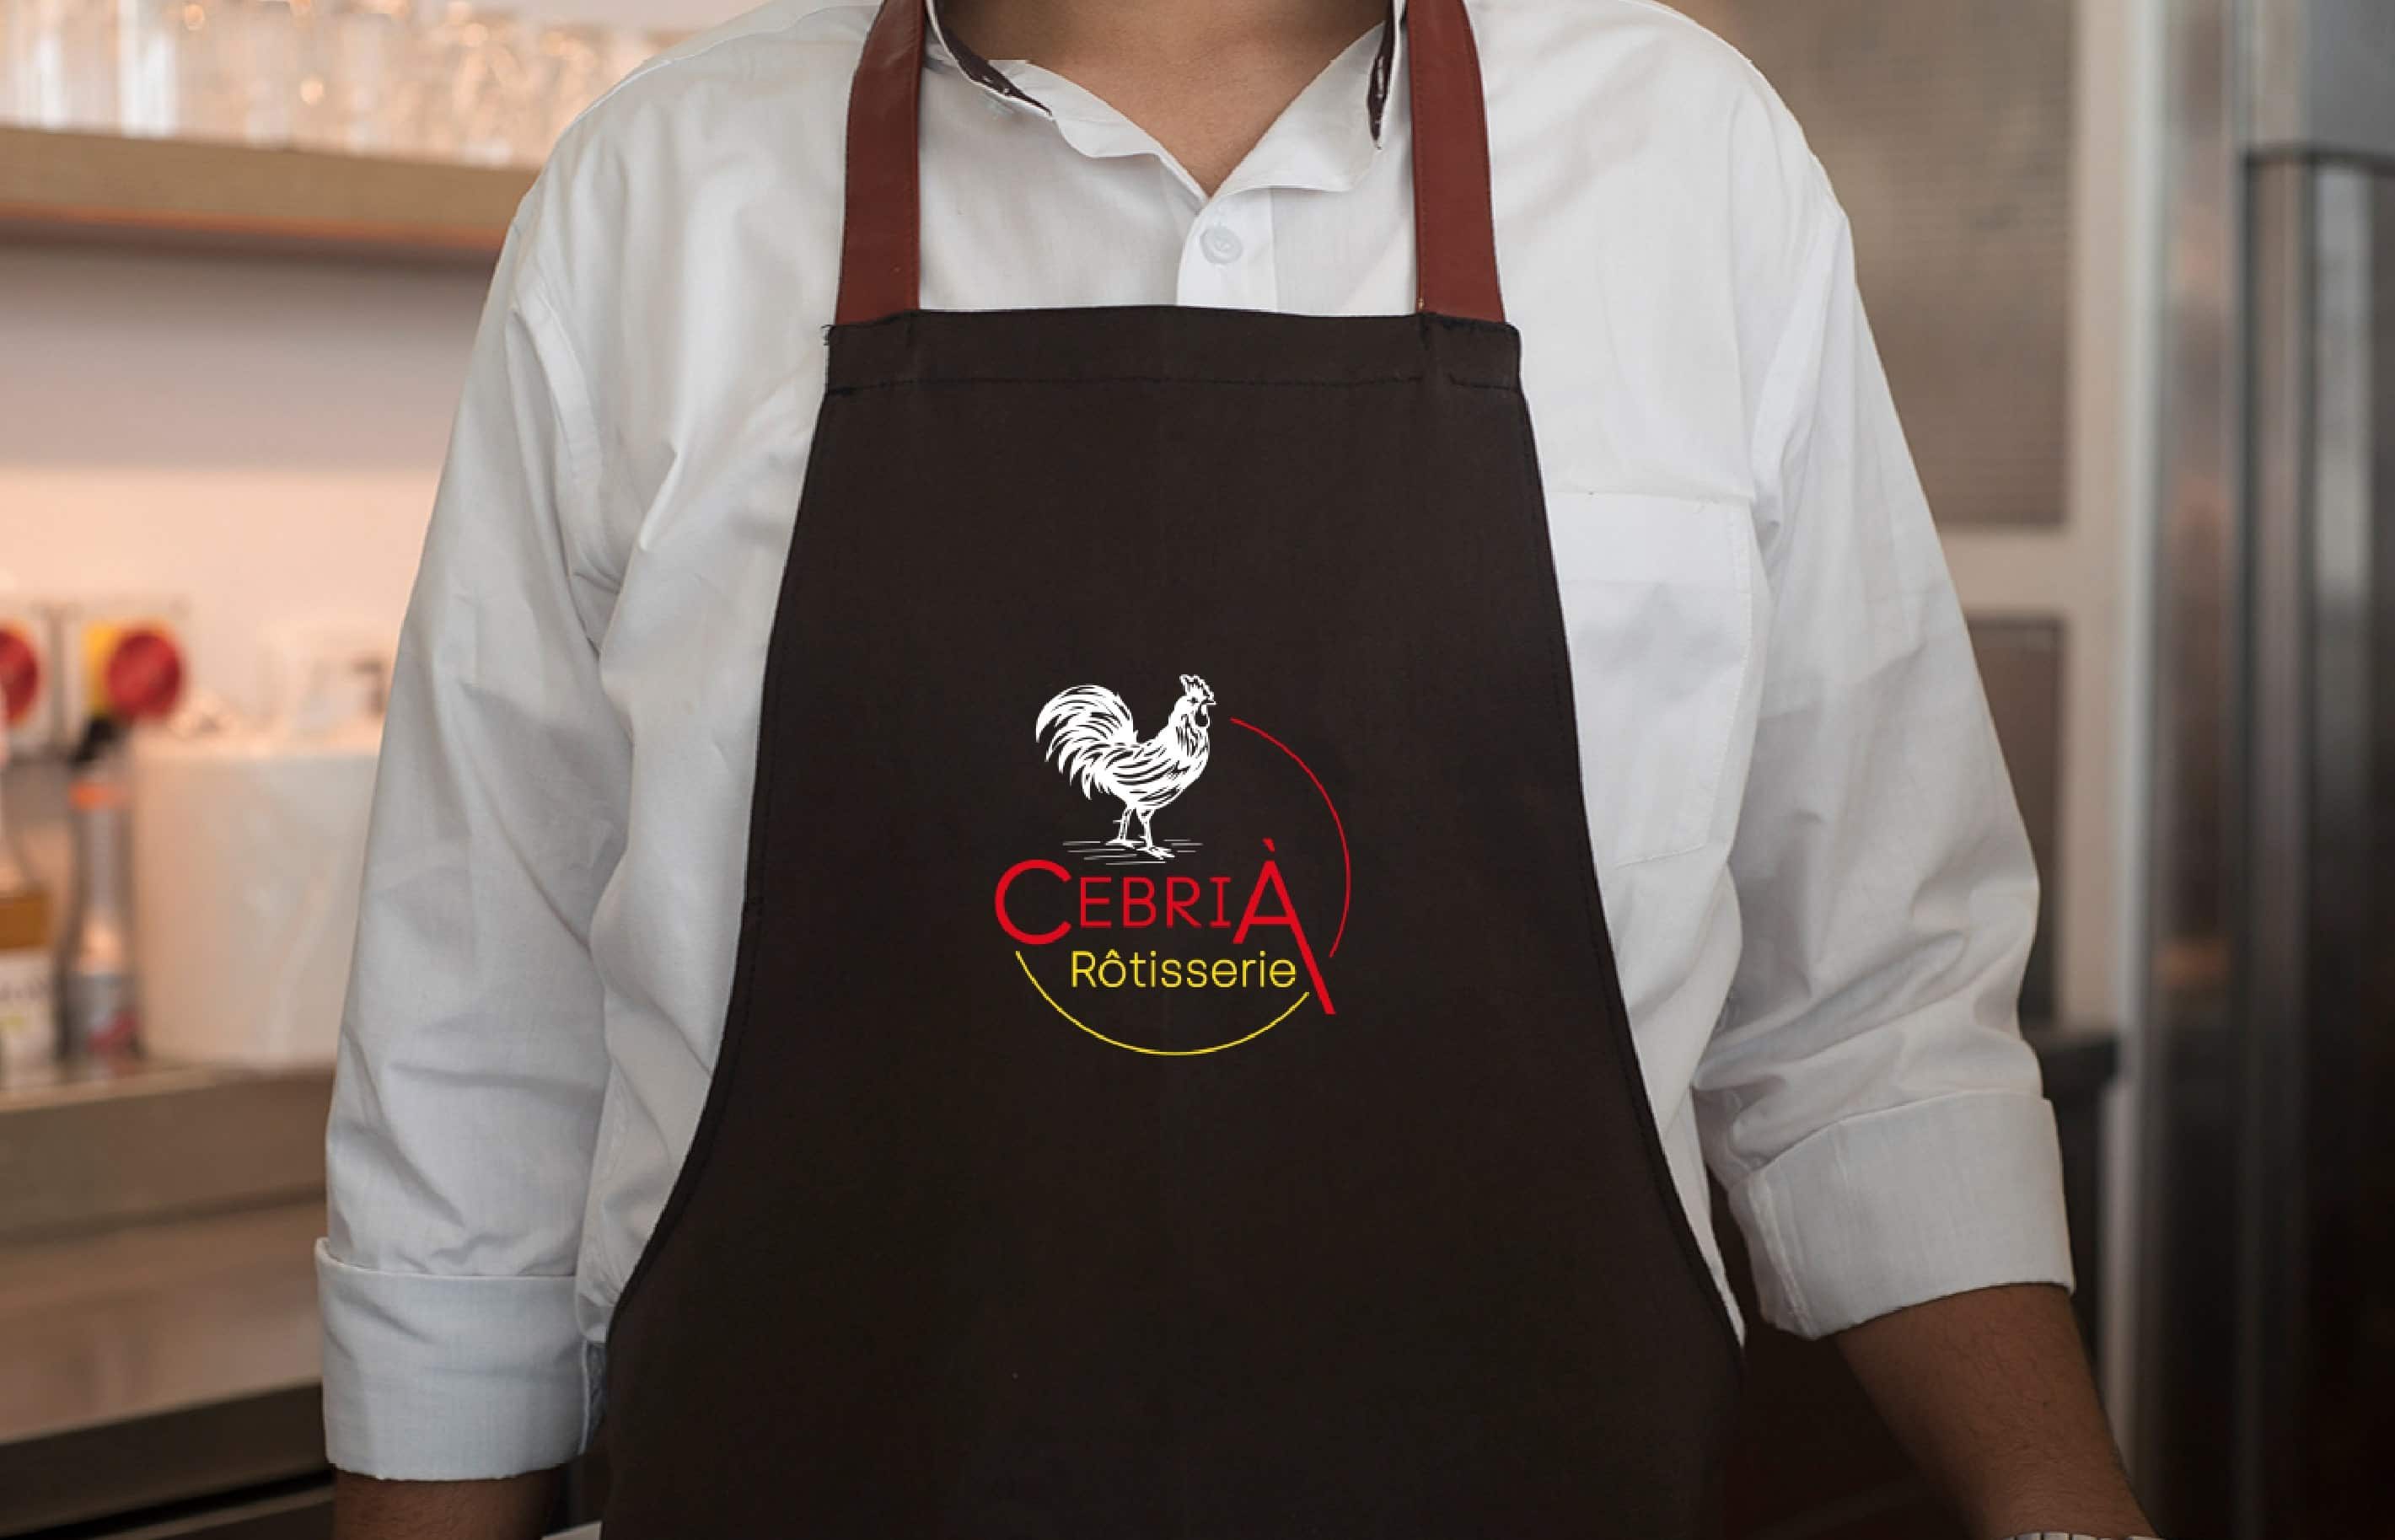 Identité Visuelle Rottisserie Cebria creation logo